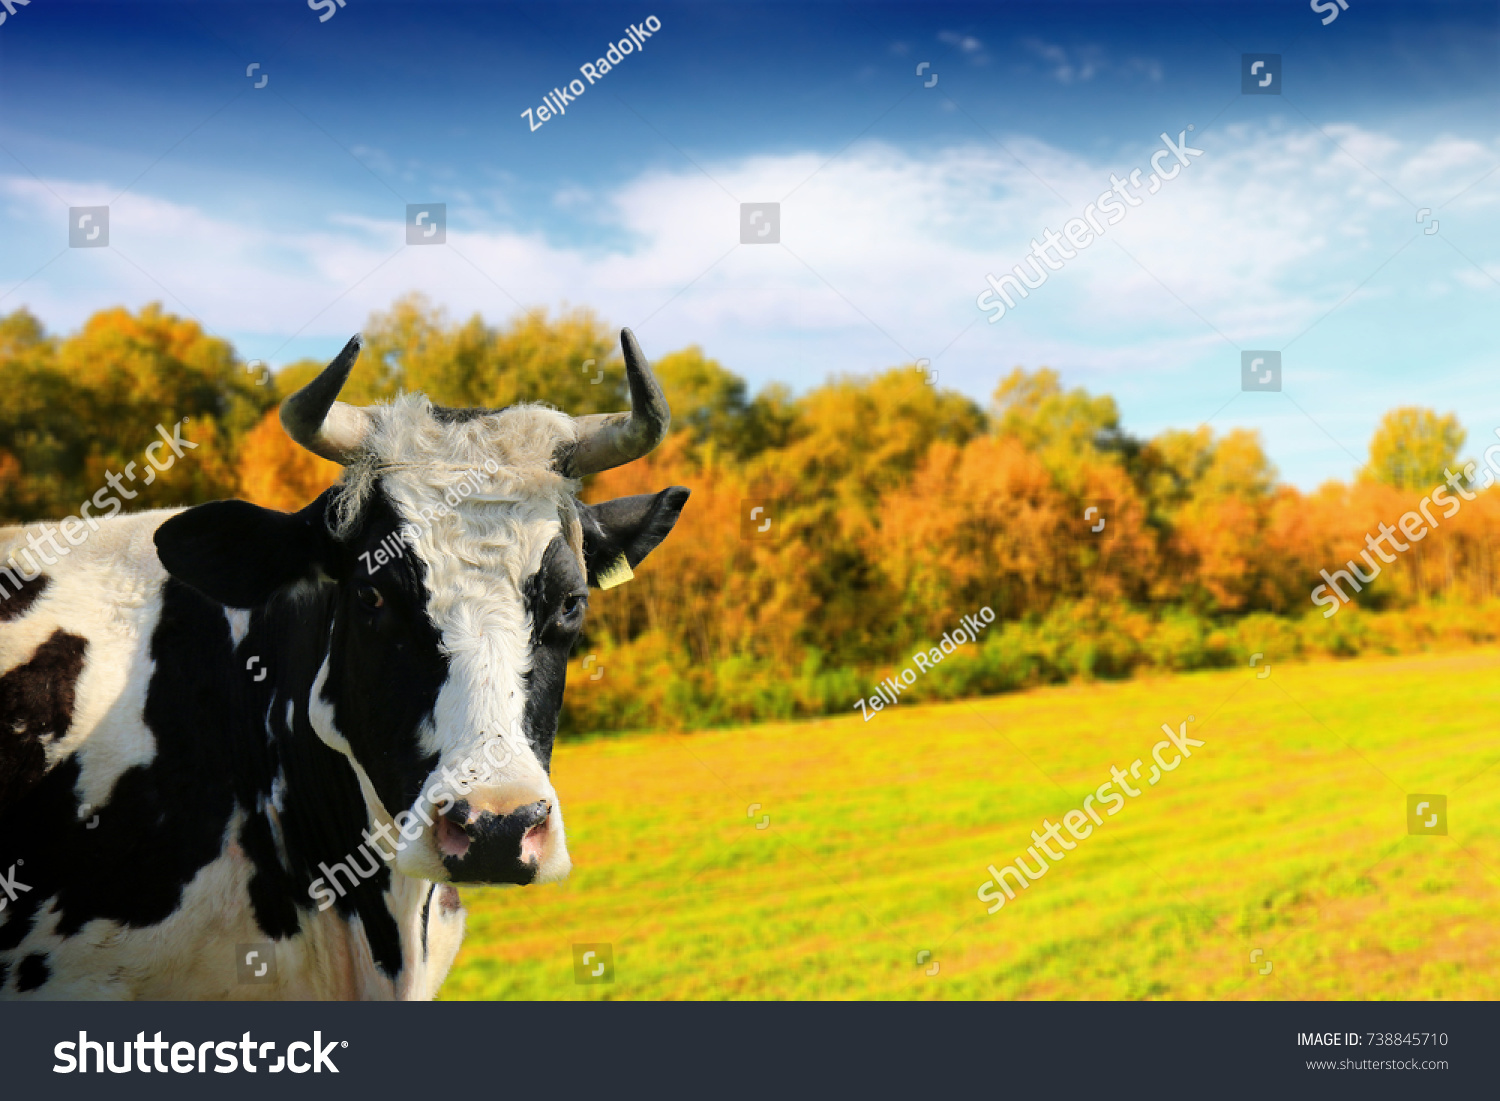 powerpoint-template-cartoon-cows-cow-okpplmoih